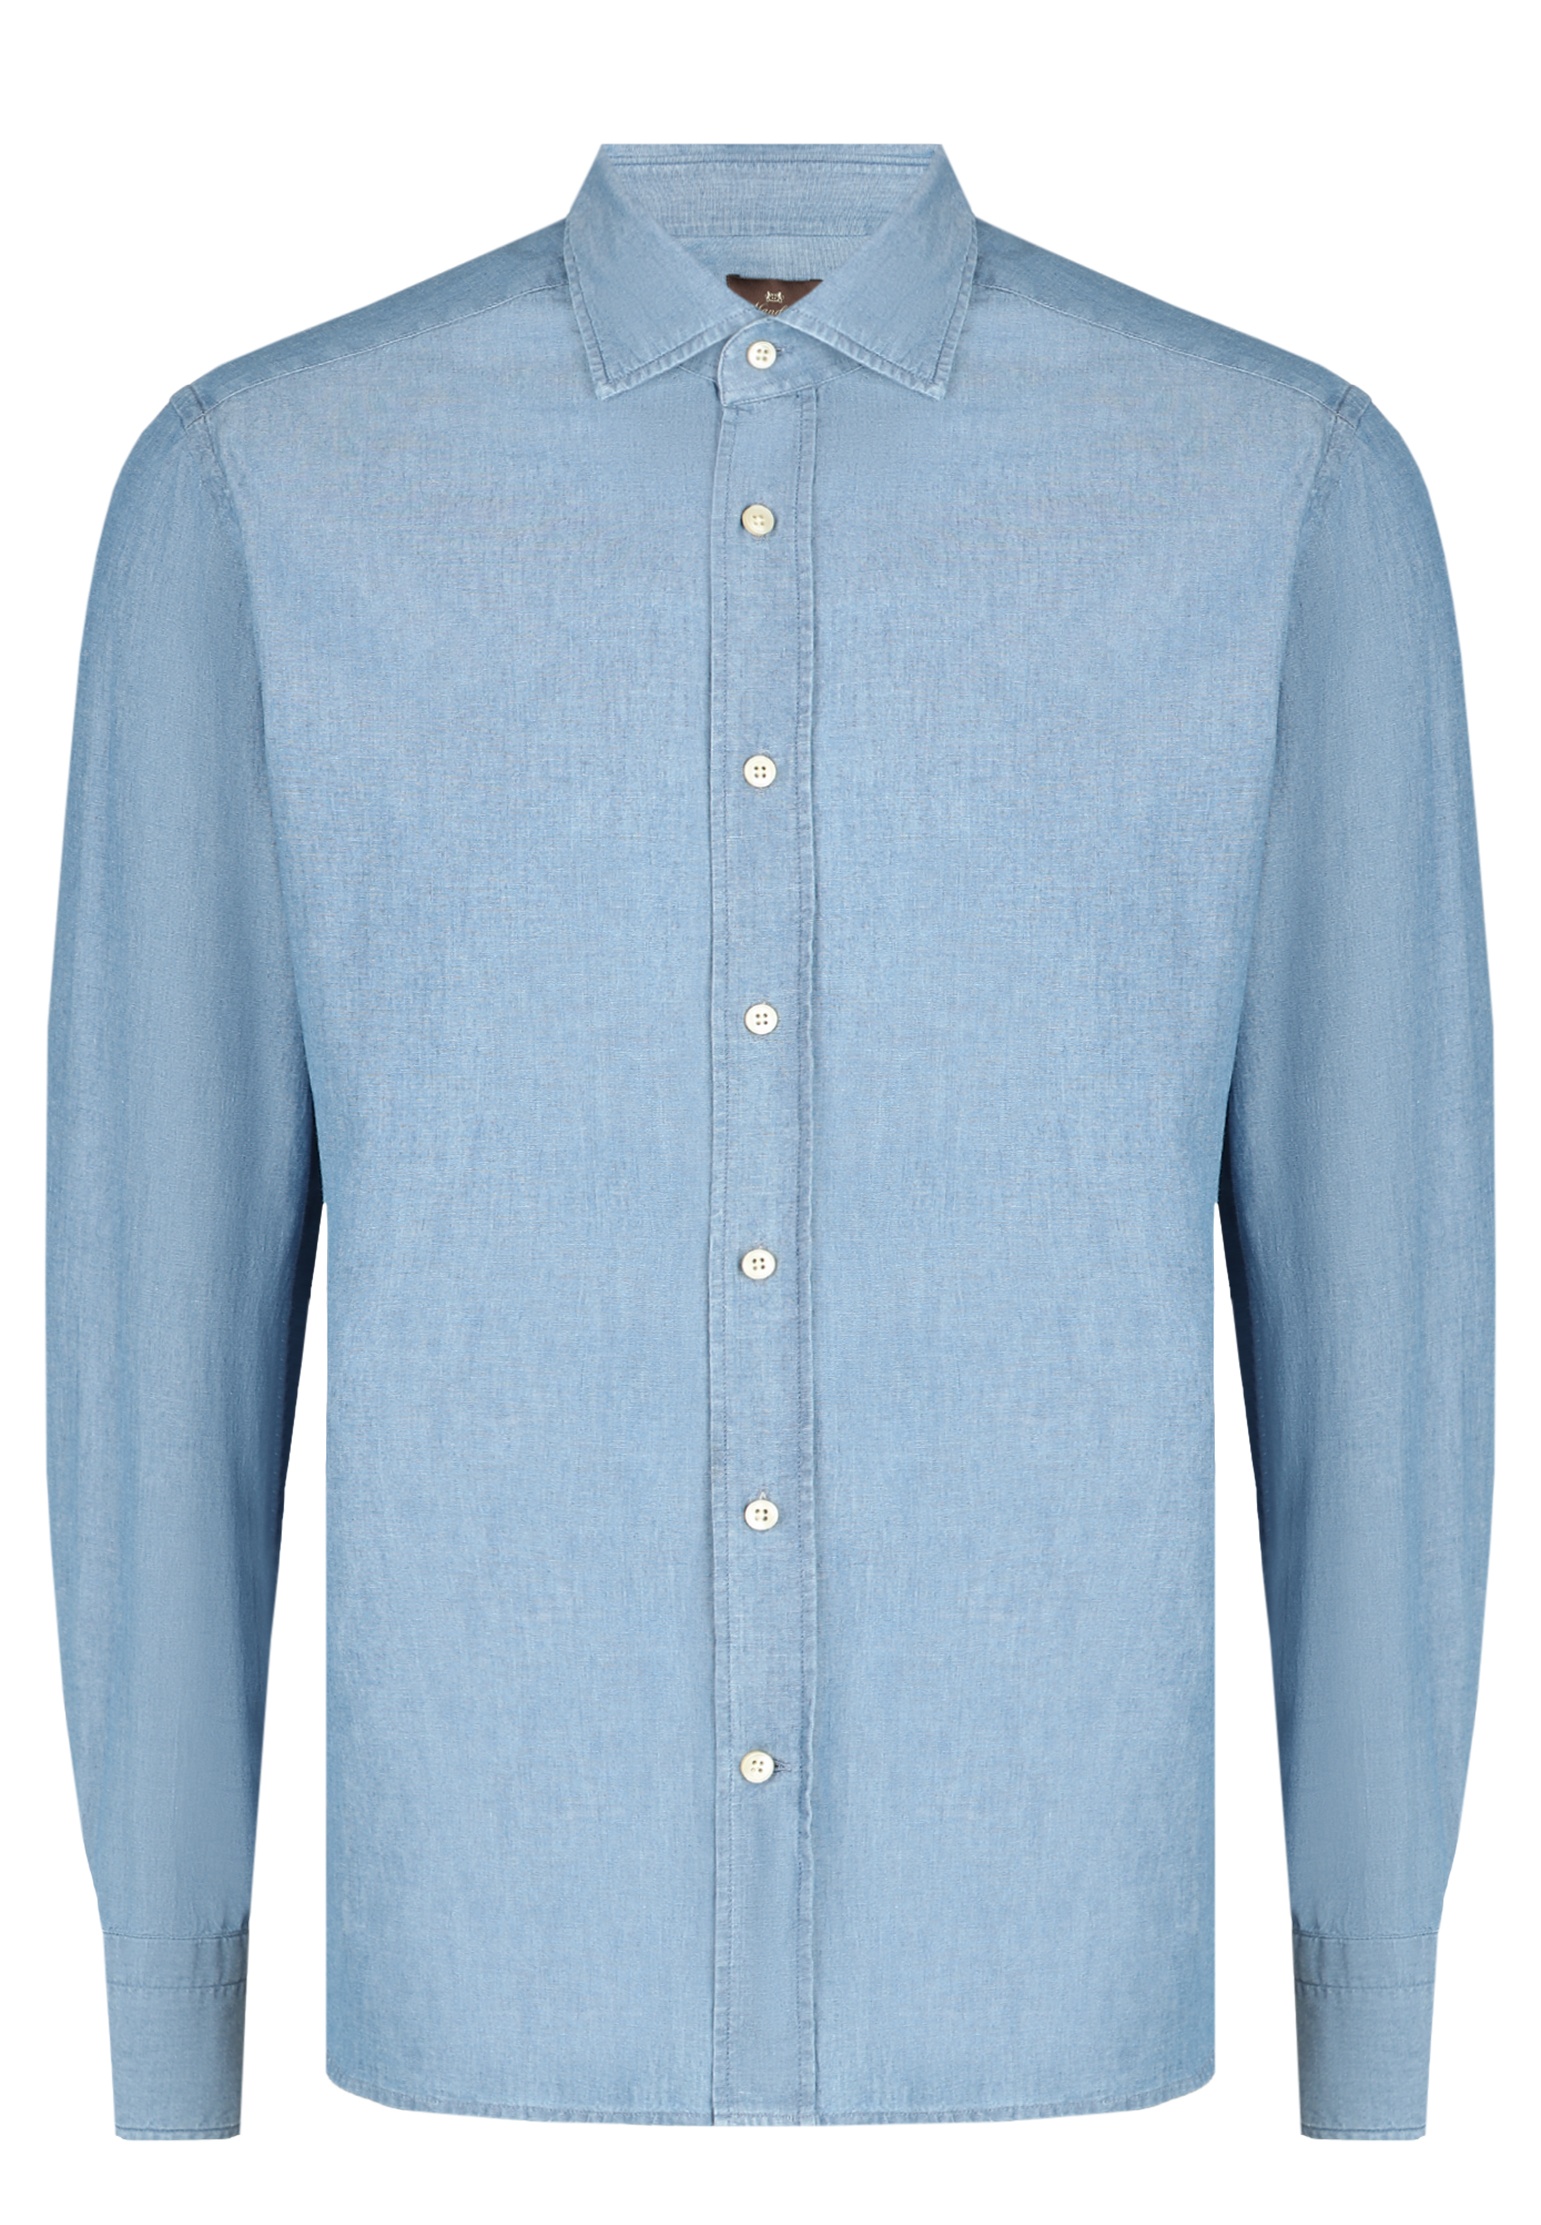 Рубашка MANDELLI Голубой, размер 42 143700 - фото 1